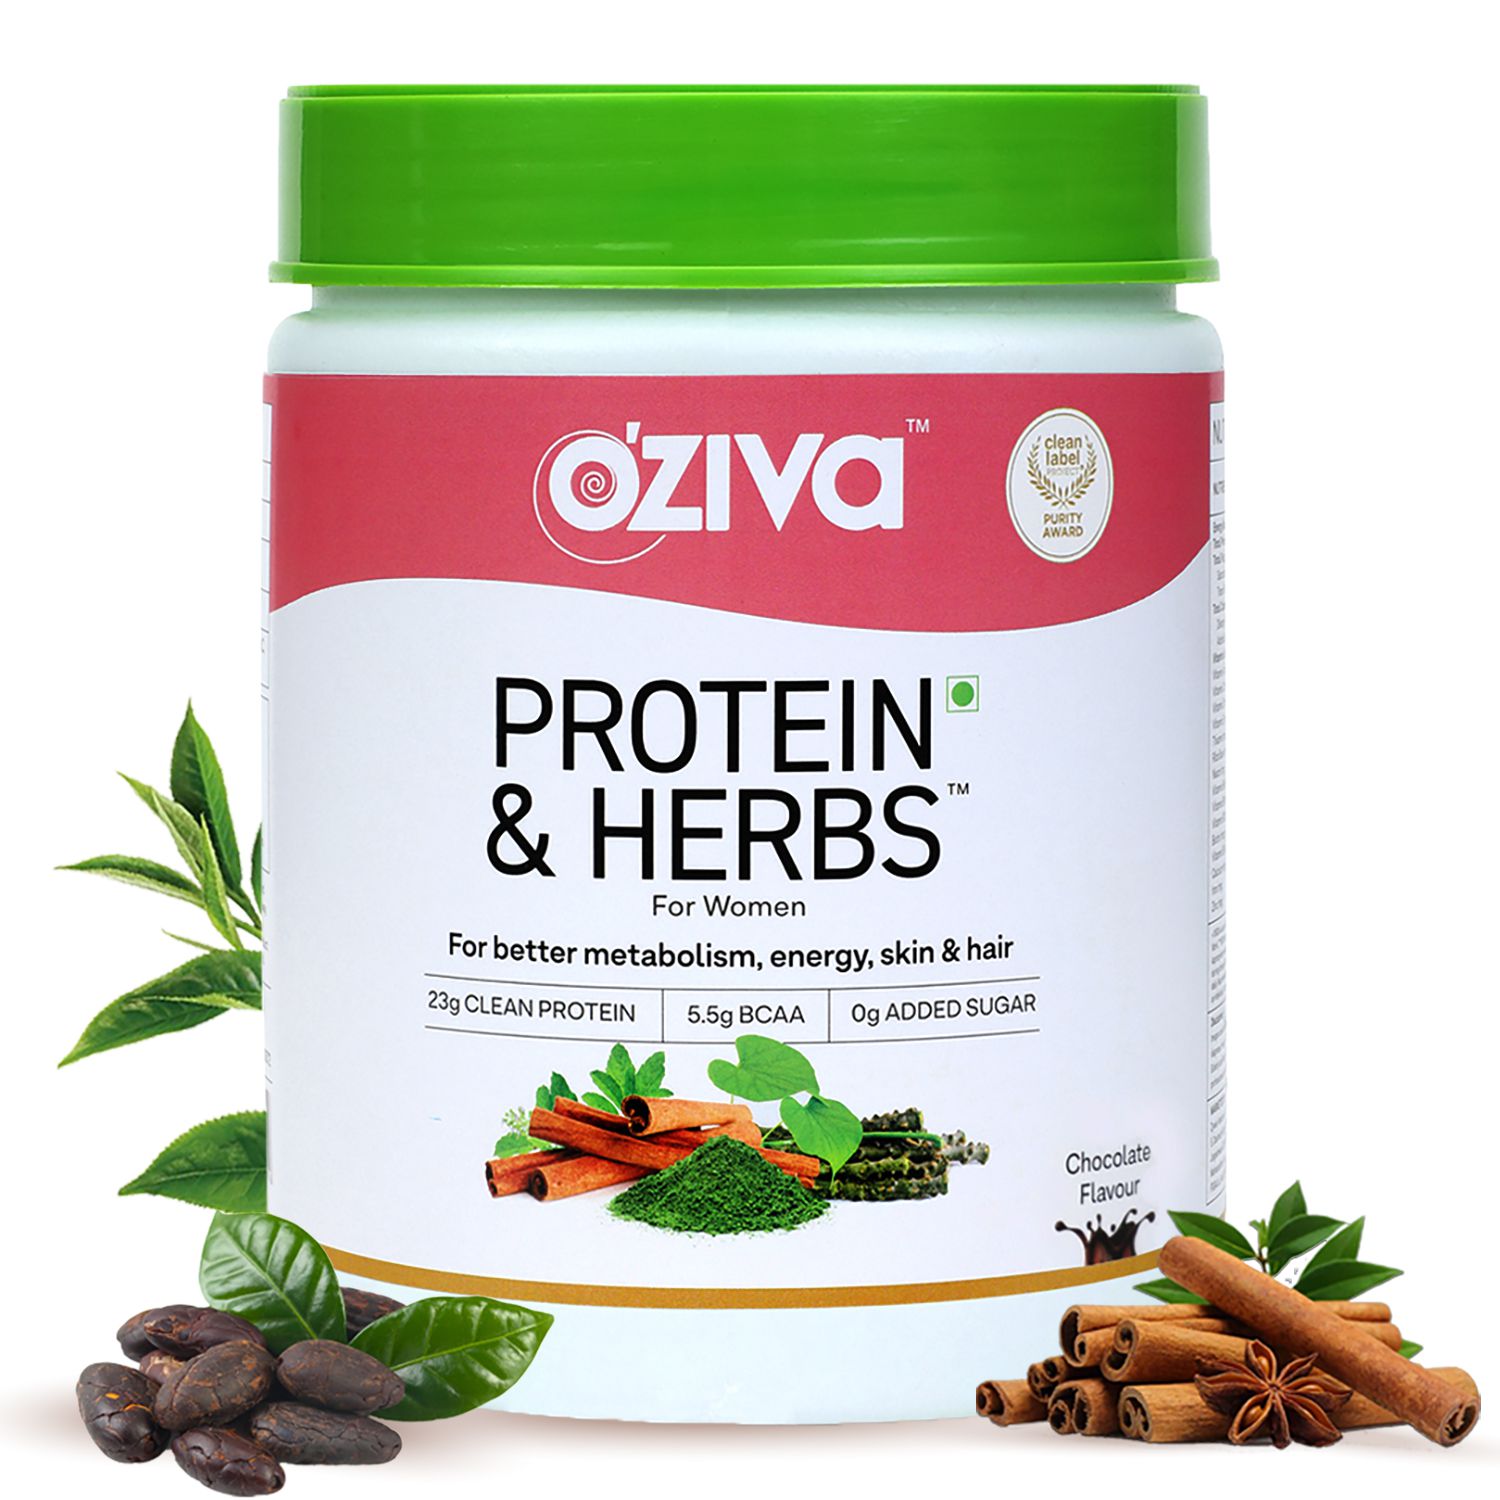 OZiva Protein & Herbs Women, Chocolate, 500g (with Ayurvedic Herbs like Shatavari, Giloy, Curcumin & Multivitamins for Better Metabolism, Skin & Hair)